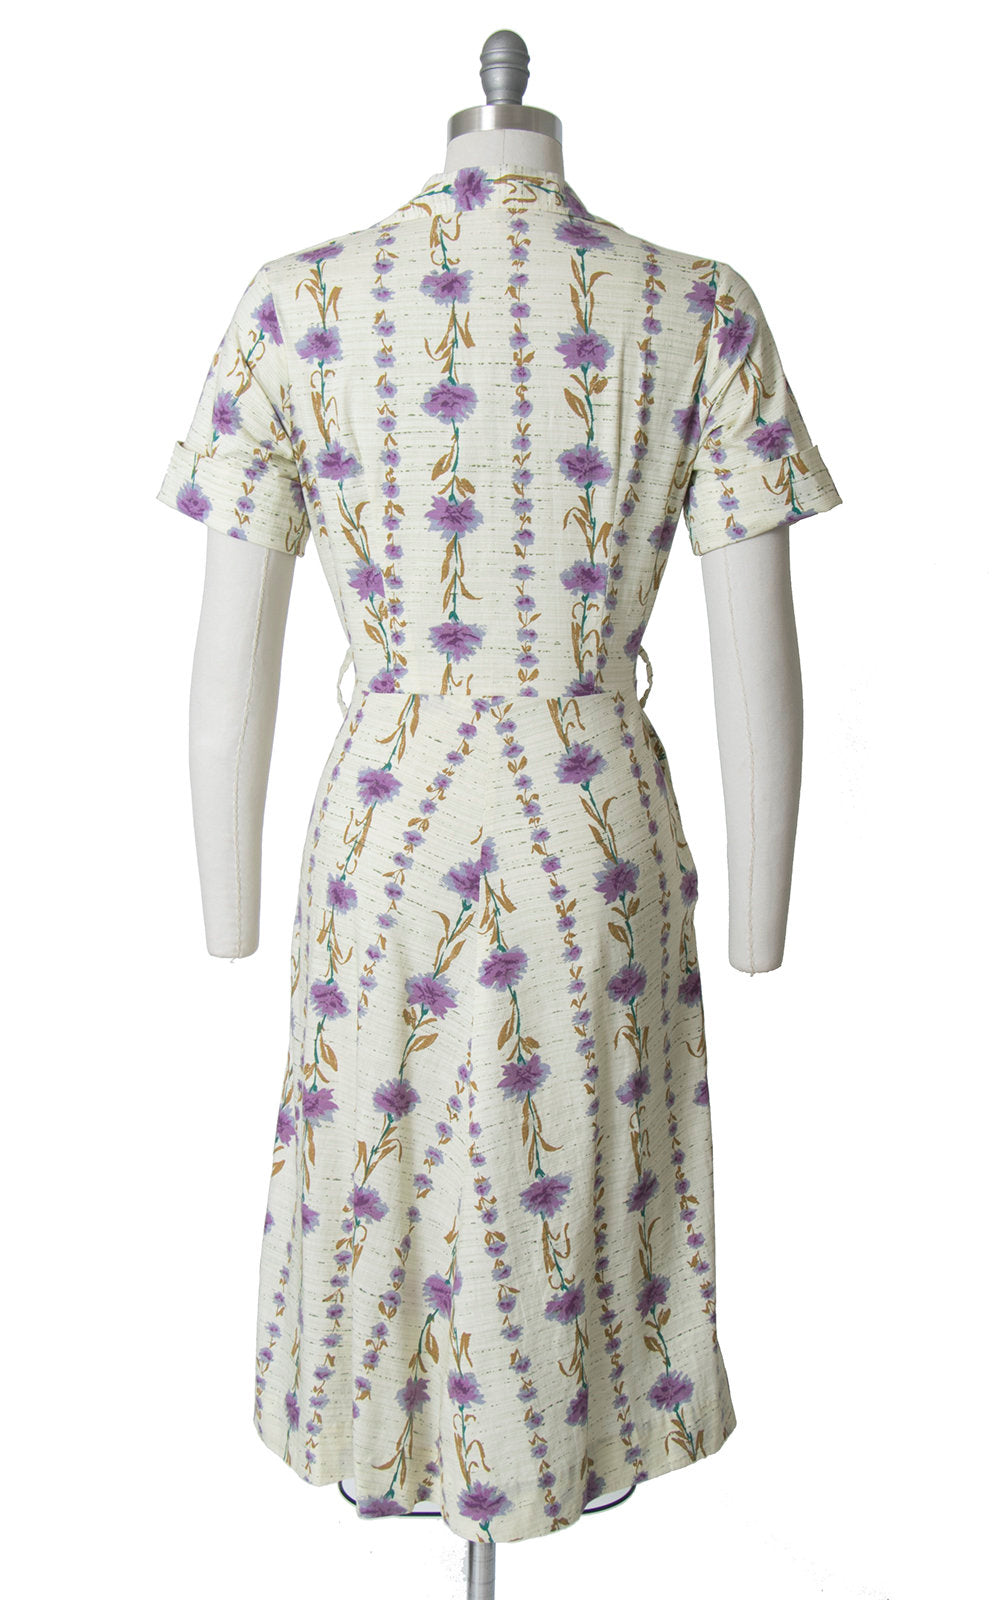 Vintage 1940s Dress | 40s Carnation Floral Print Cotton Shirt Dress Cream Purple Striped Shirtwaist Day Dress (medium)